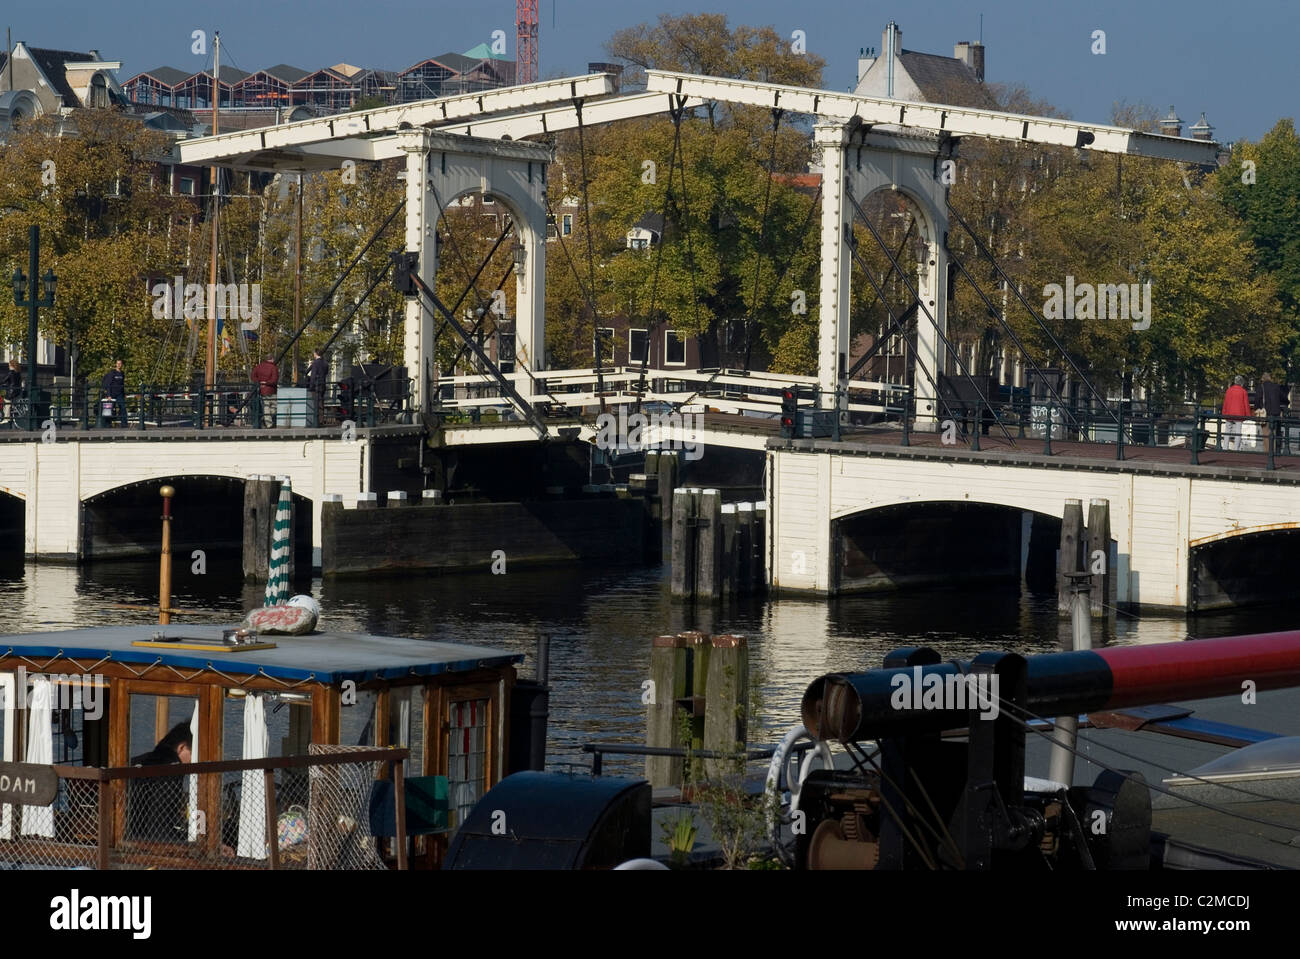 Magere Brug (Skinny Bridge), over the Amstel, Amsterdam. Stock Photo